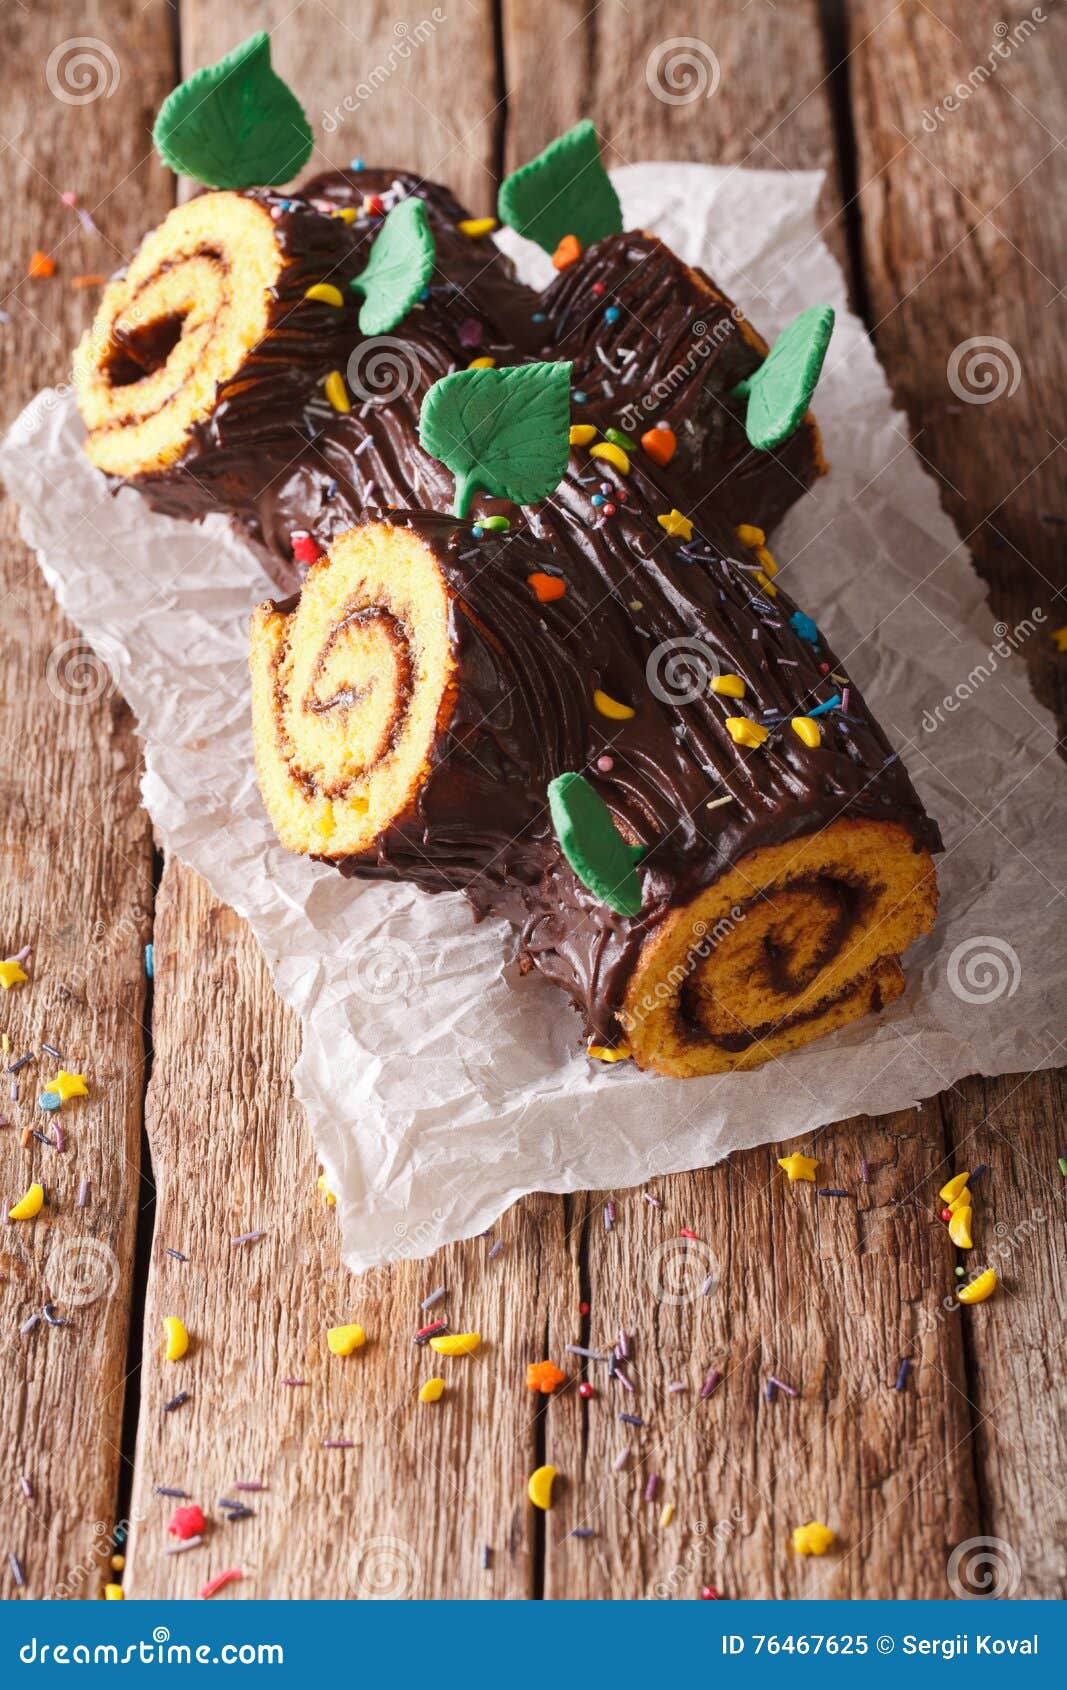 Homemade Buche De Noel, Chocolate Yule Log Christmas Cake. Stock Image ...